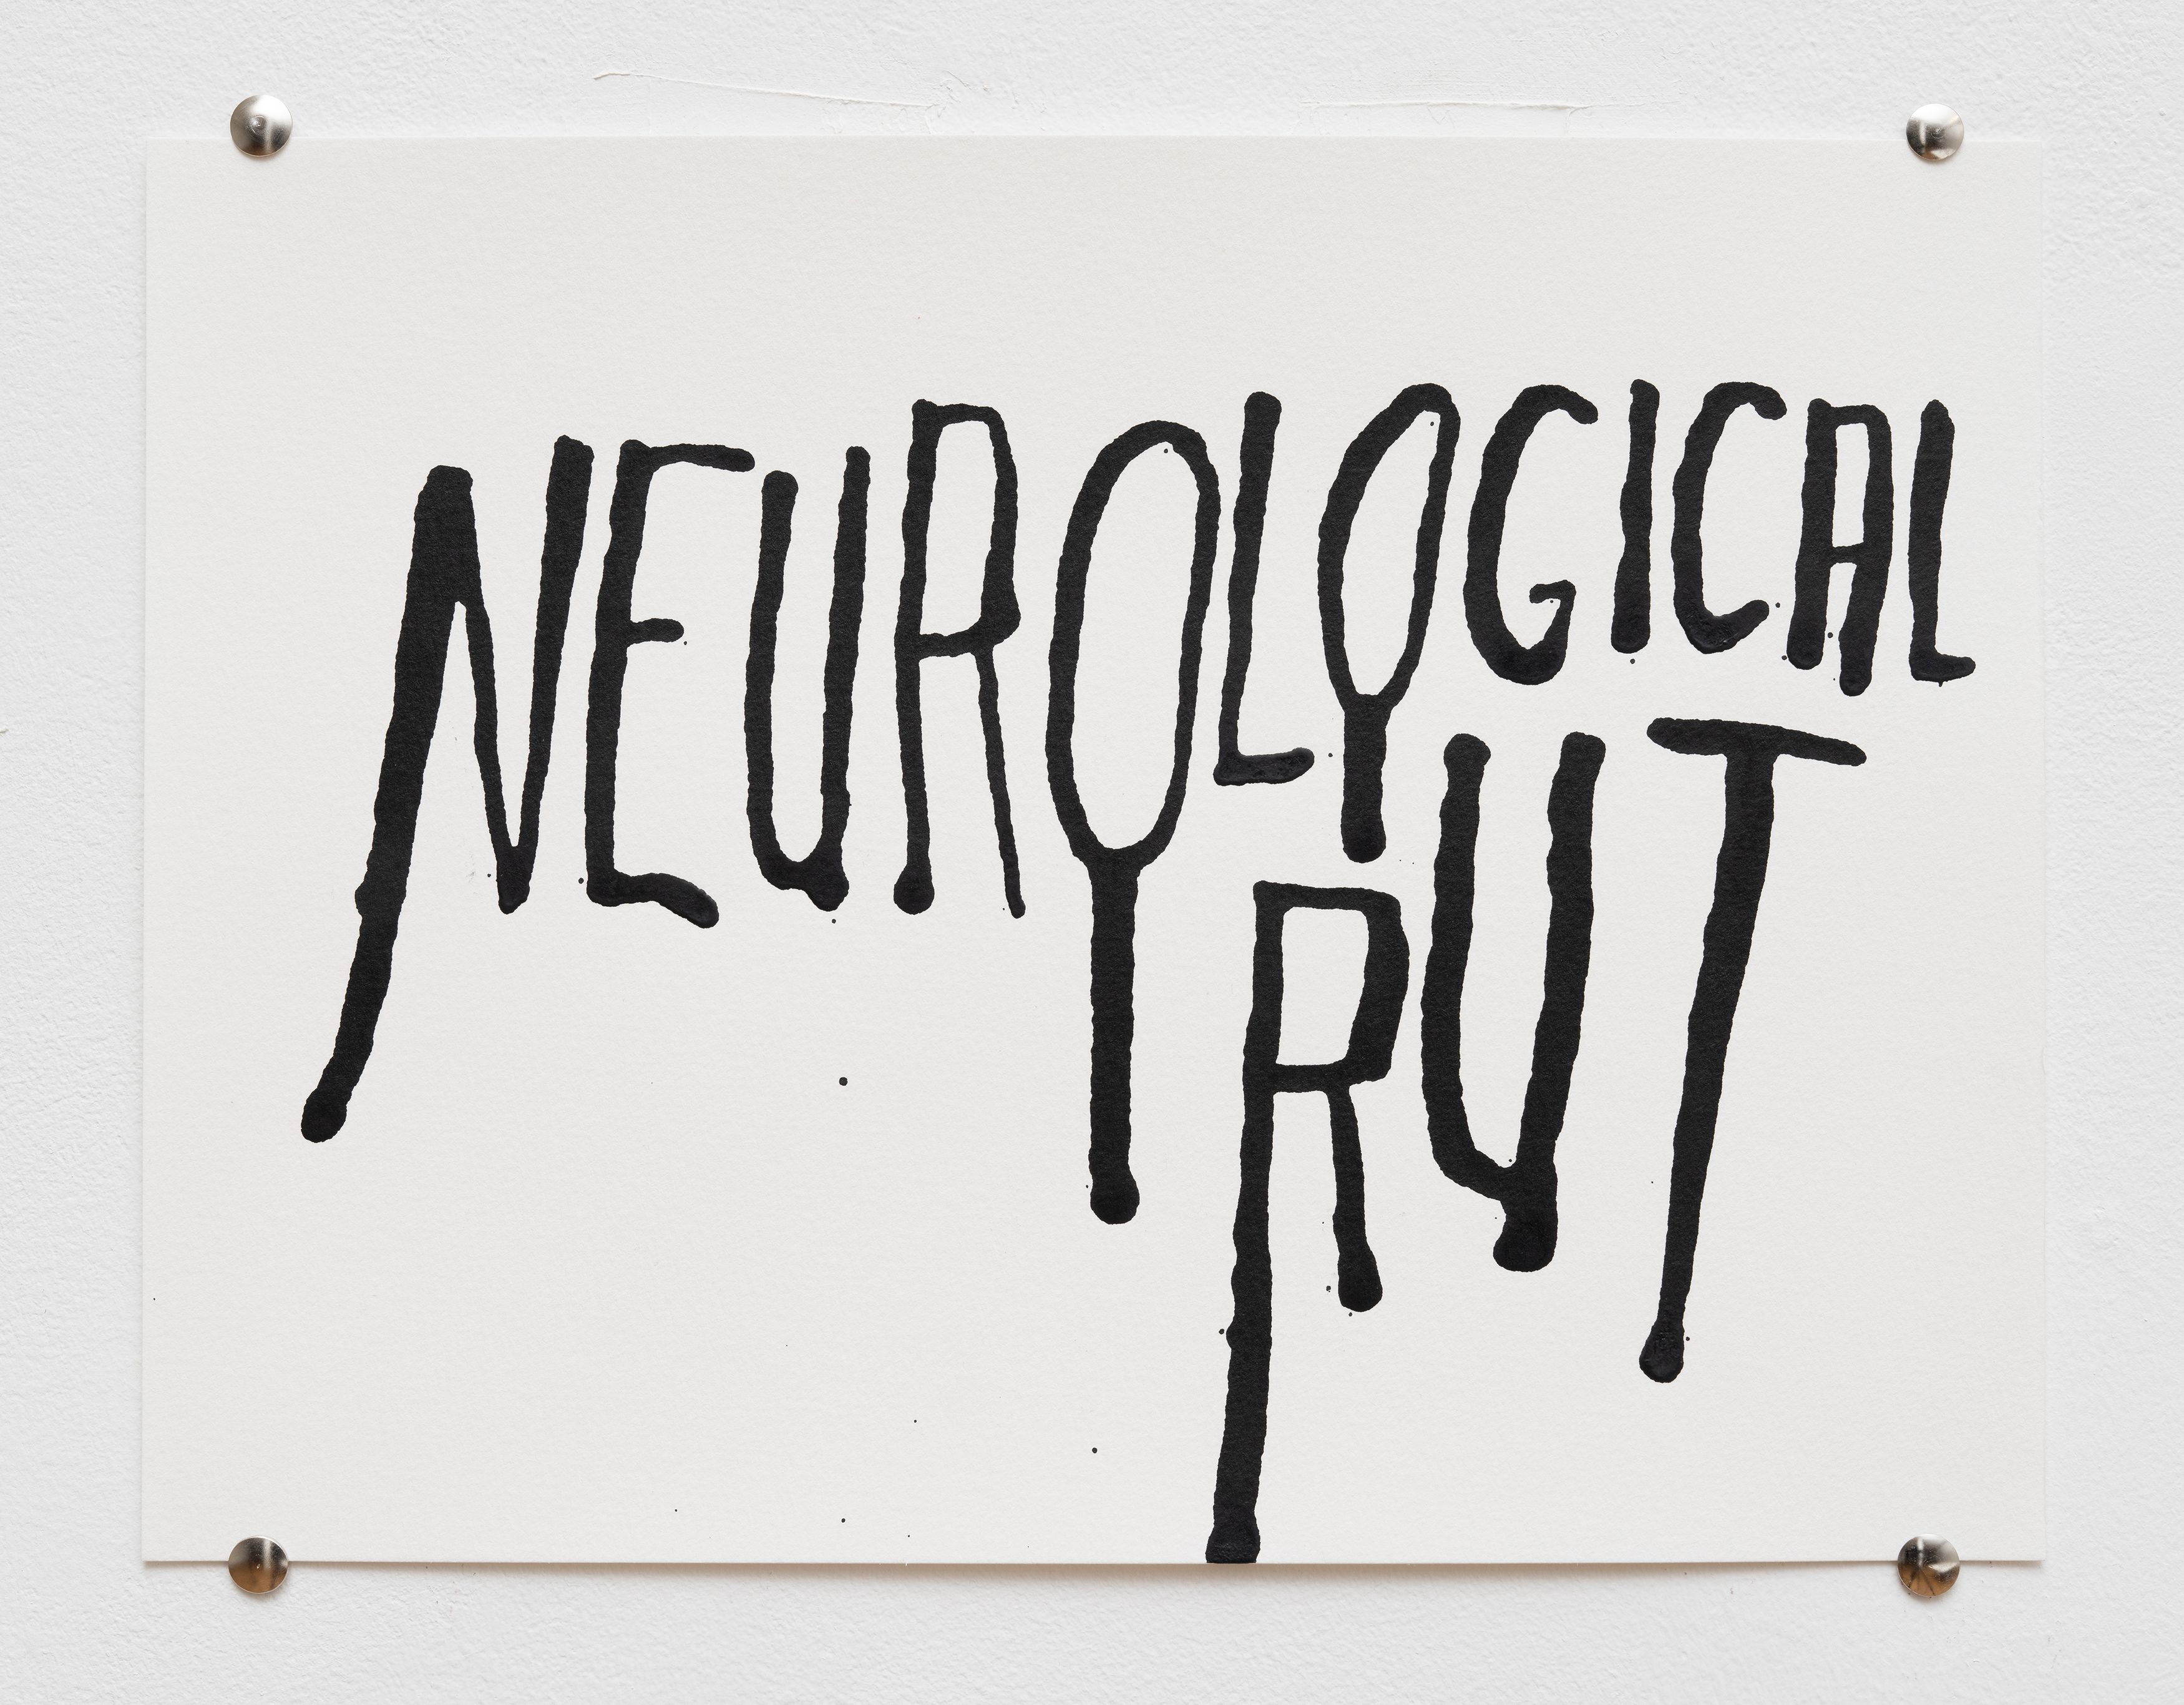 Steve Reinke, Untitled (Neurological Rut), 2021, ink on paper, 11 3/4 x 8 1/2 in.